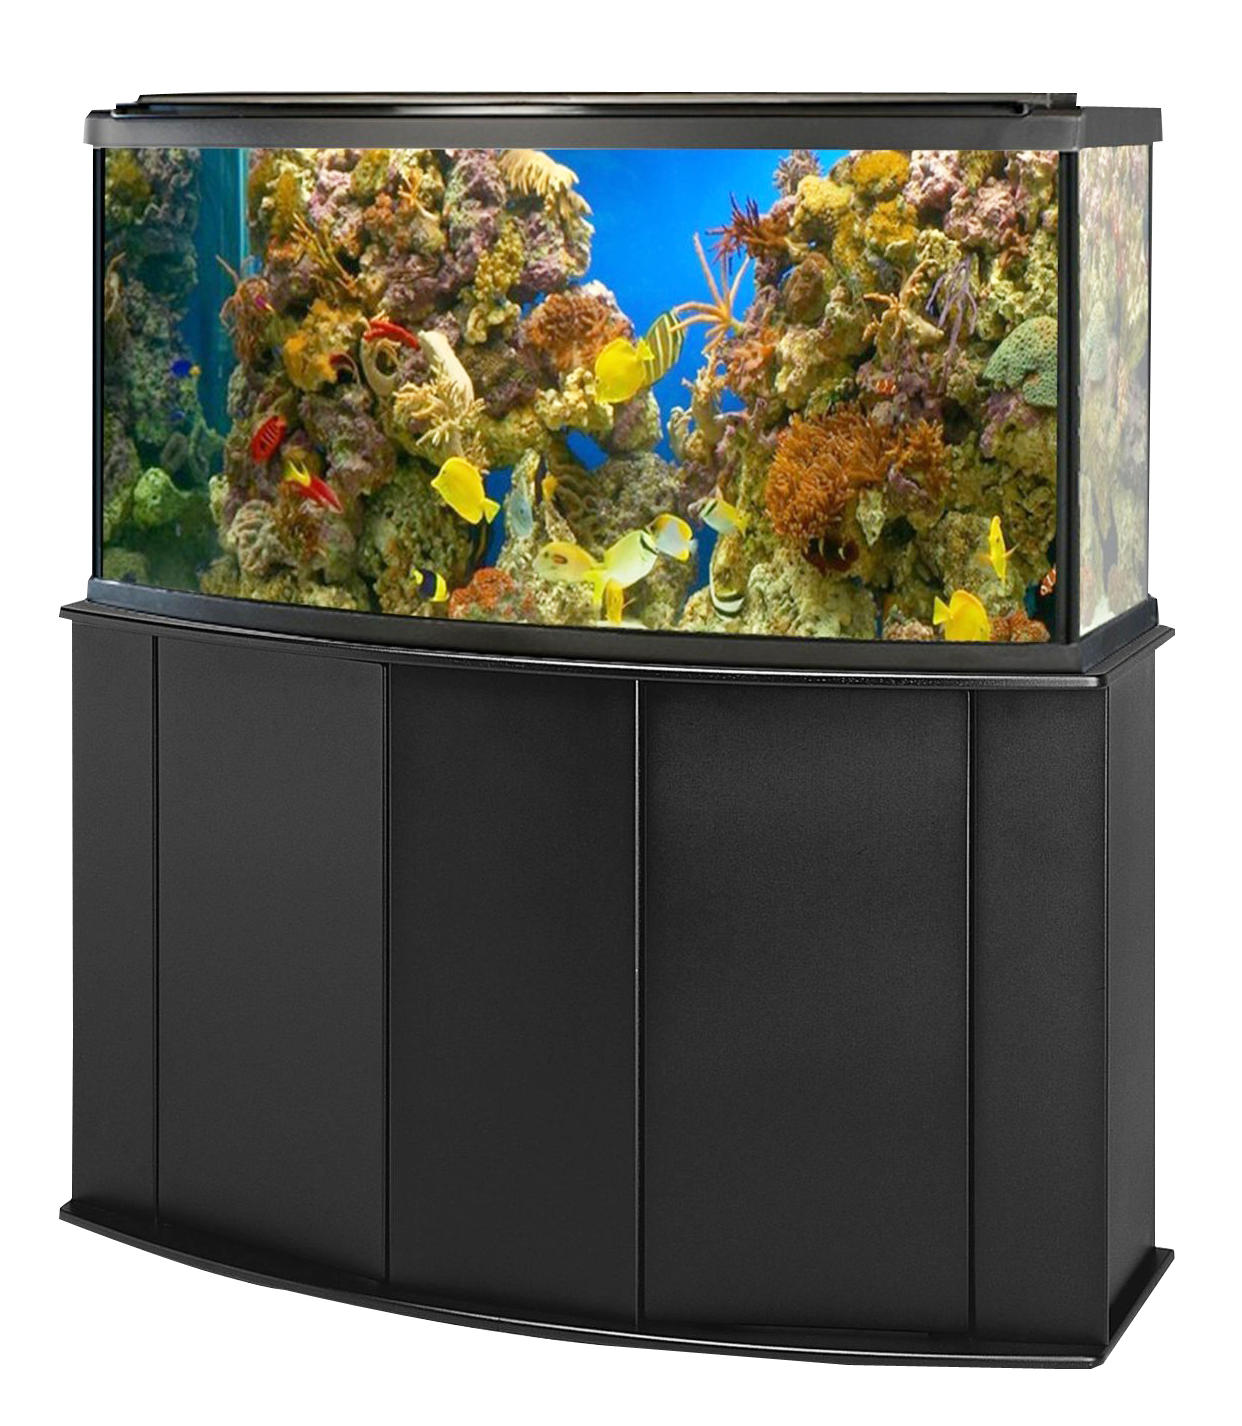 Fish Tank Aquarium HQ Image Free PNG Image